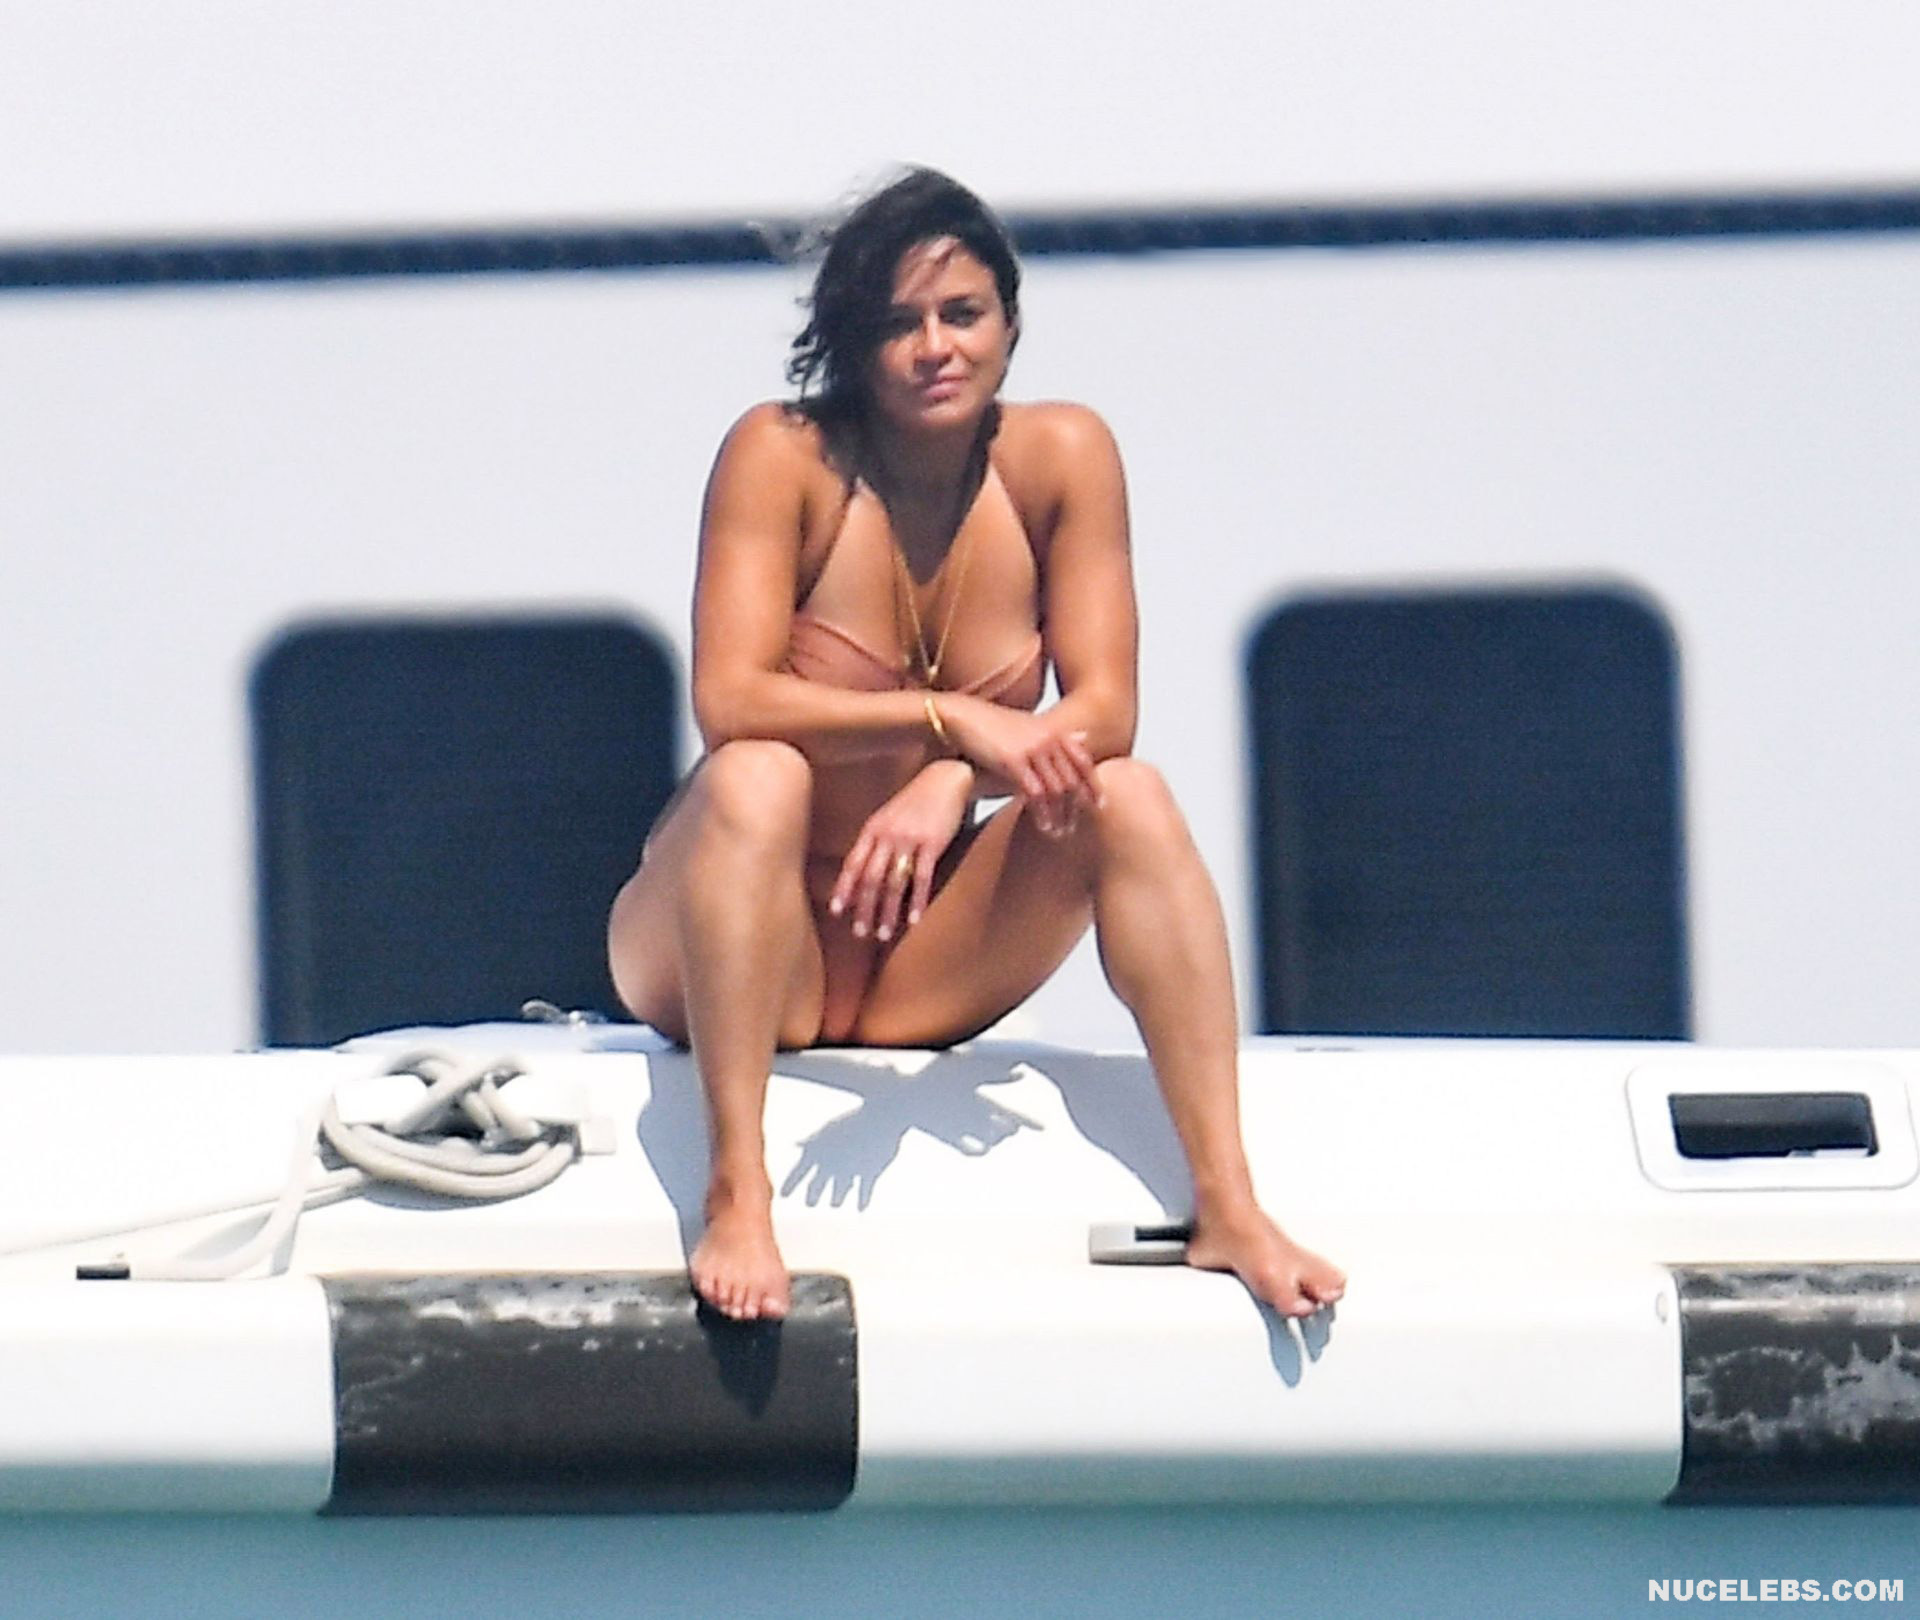 Rodriguez videos michelle nude Michelle Rodriguez